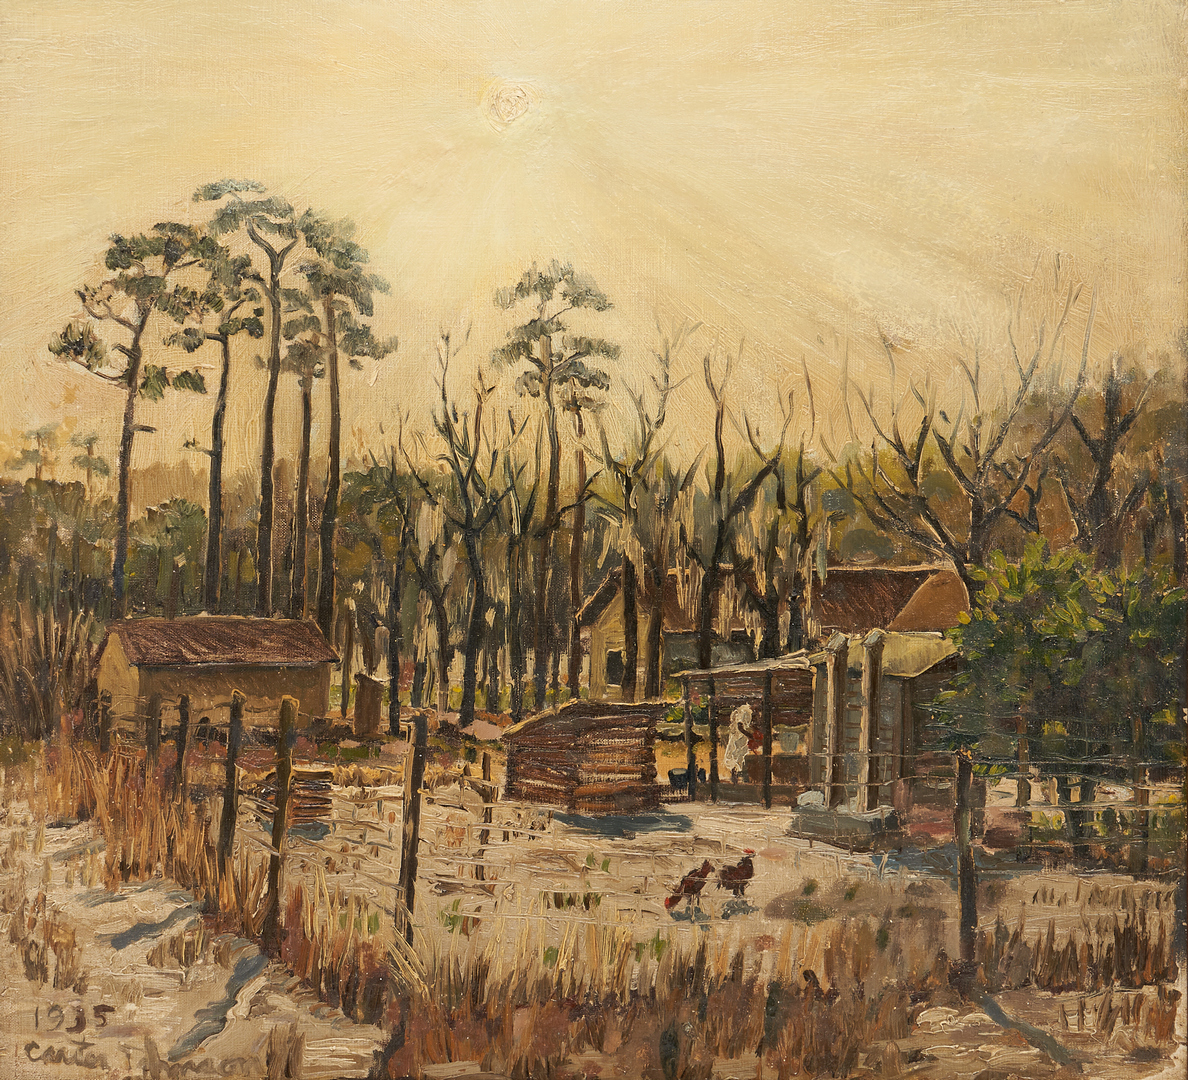 Lot 205: Farm Landscape Painting, Signed Carter Johnson 1935